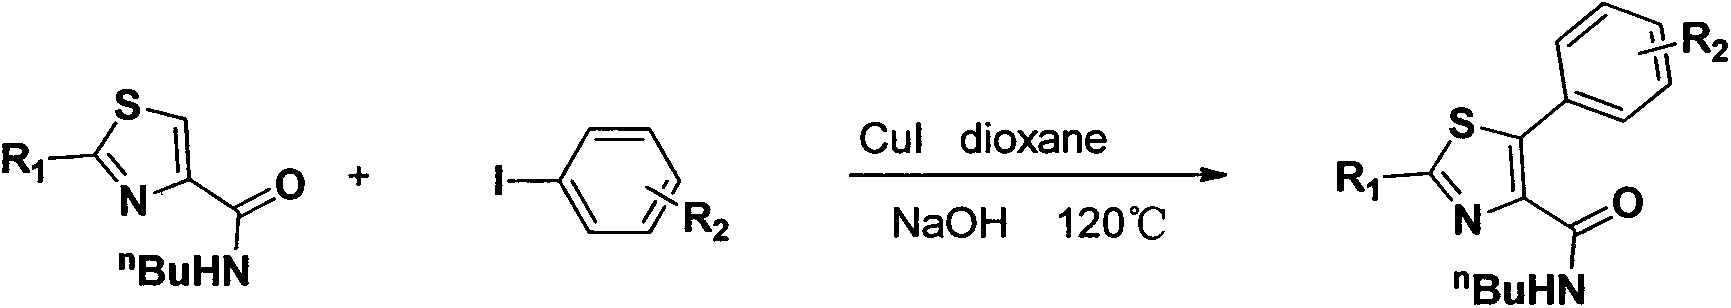 Preparation method of N-butyl-5-phenylthiazole-4-formamide derivative